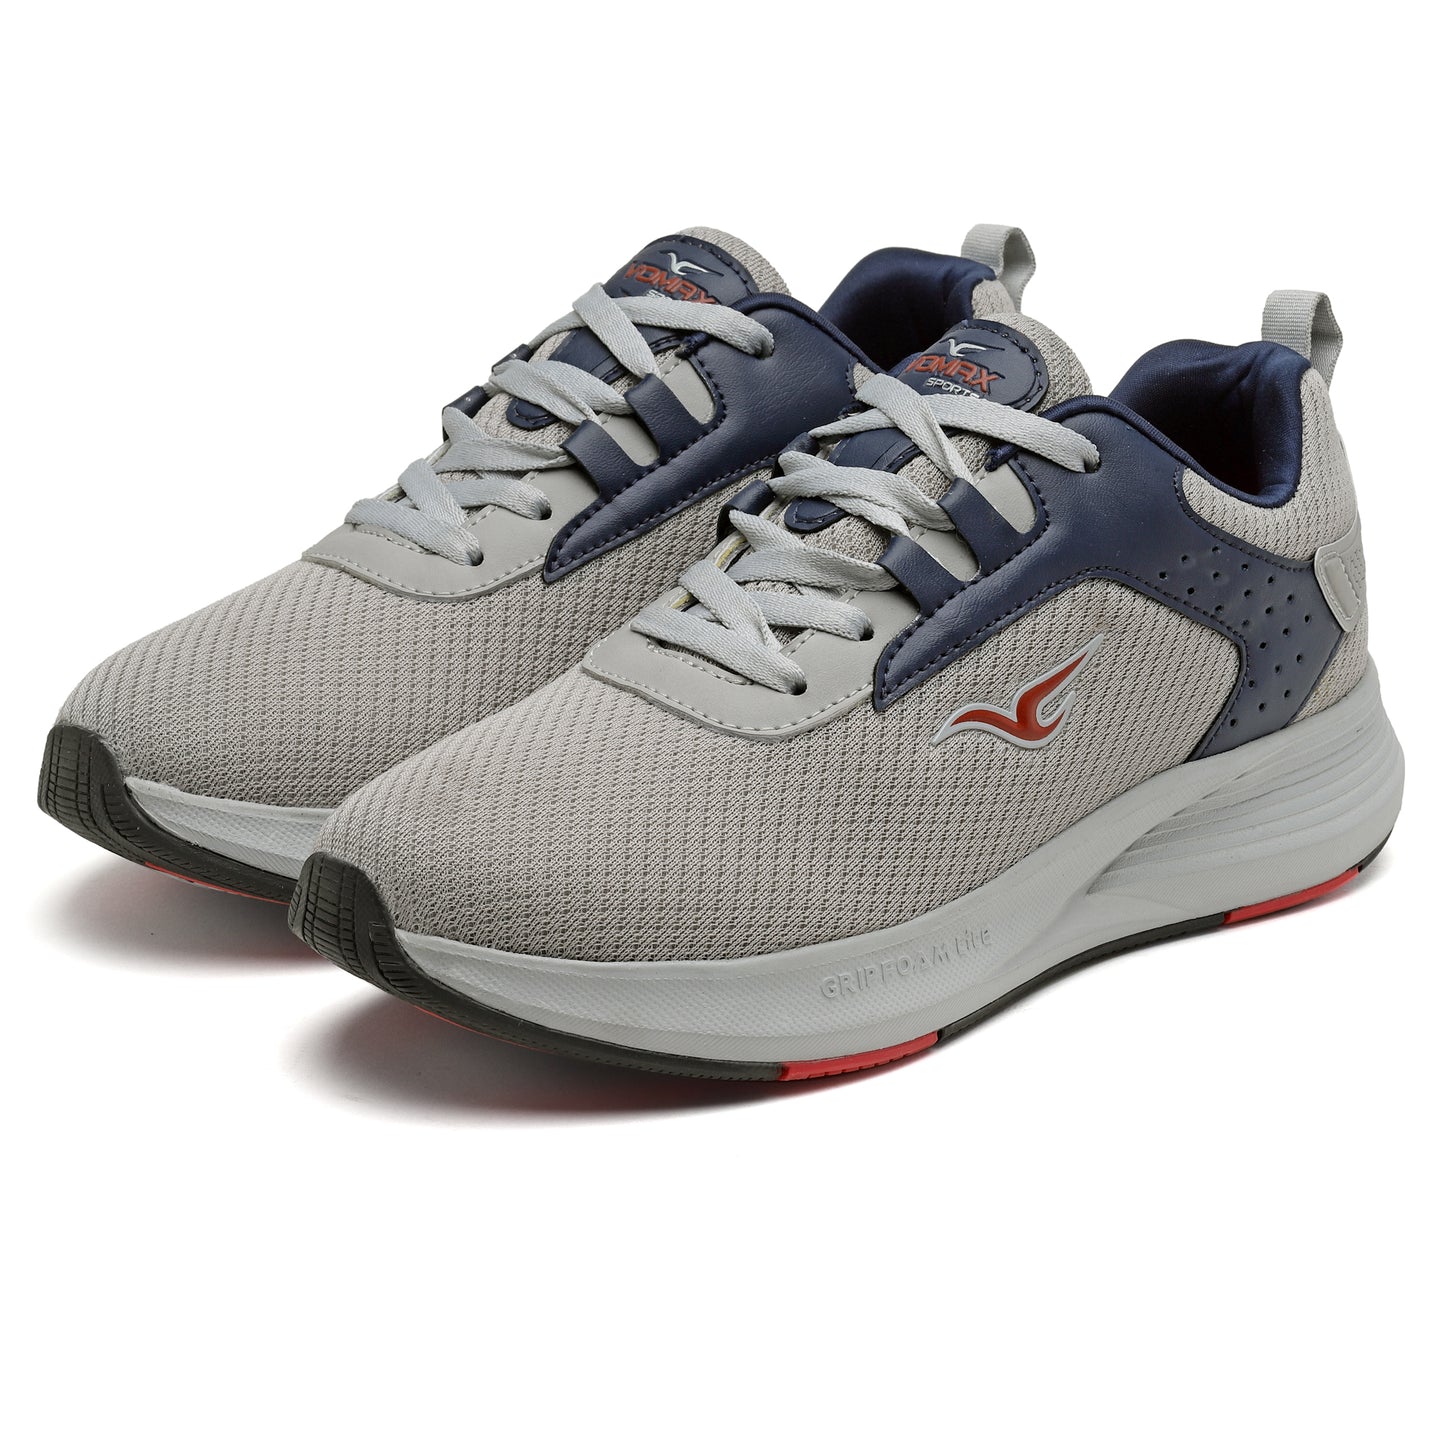 Vomax Sports York-02 Men's Sports Road Running Shoes